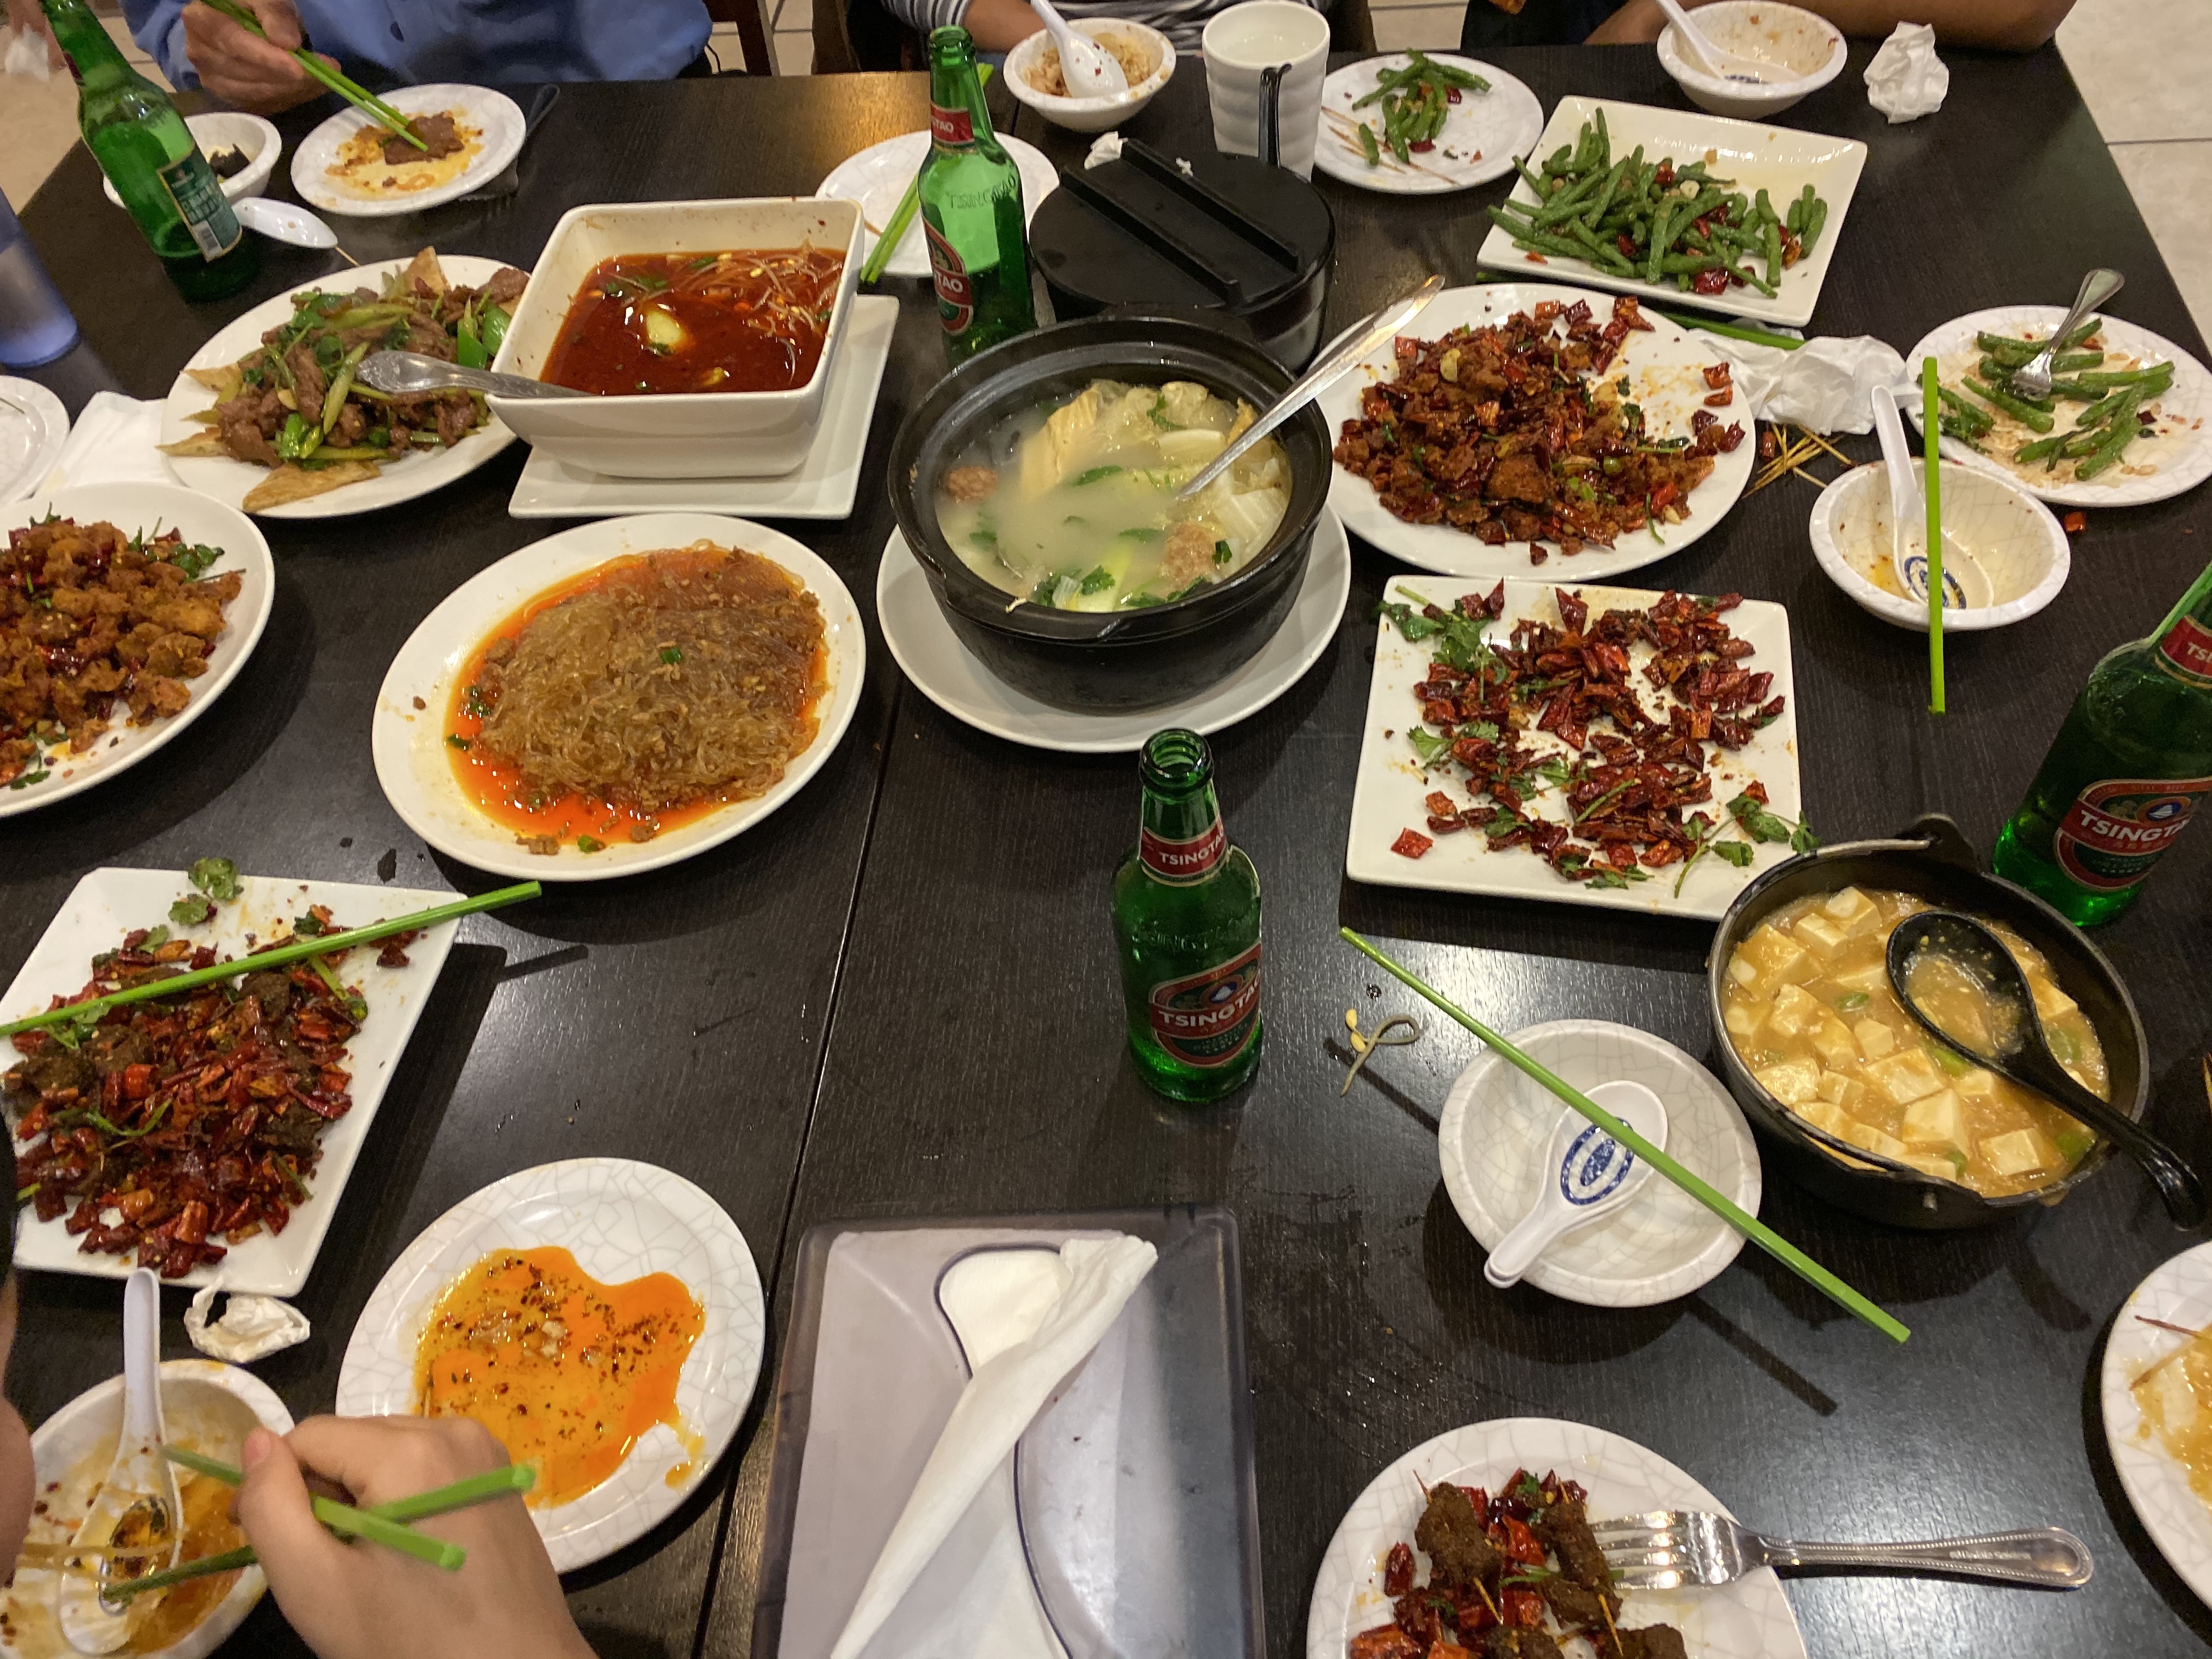 Chenyang's graduation dinner